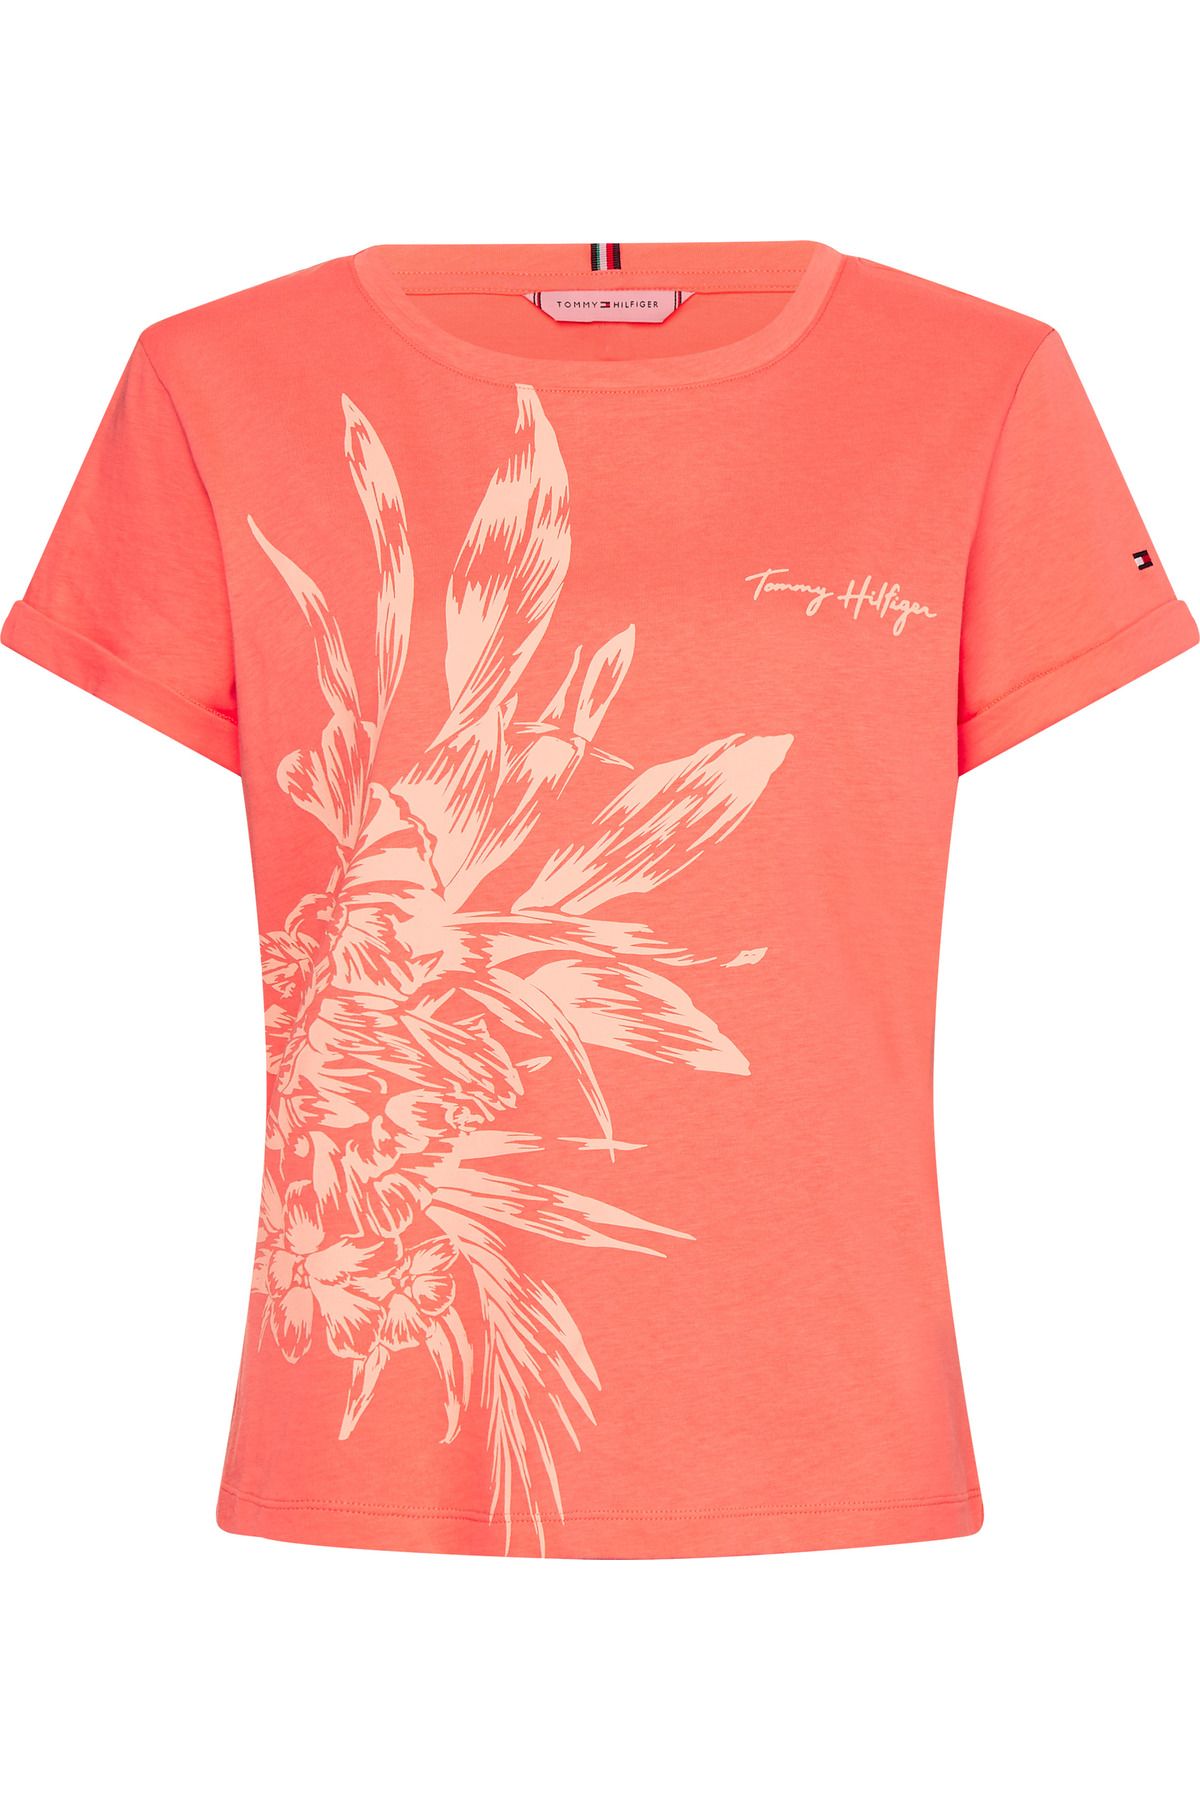 Tommy Hilfiger Kadın / Kız Pembe T-Shirt